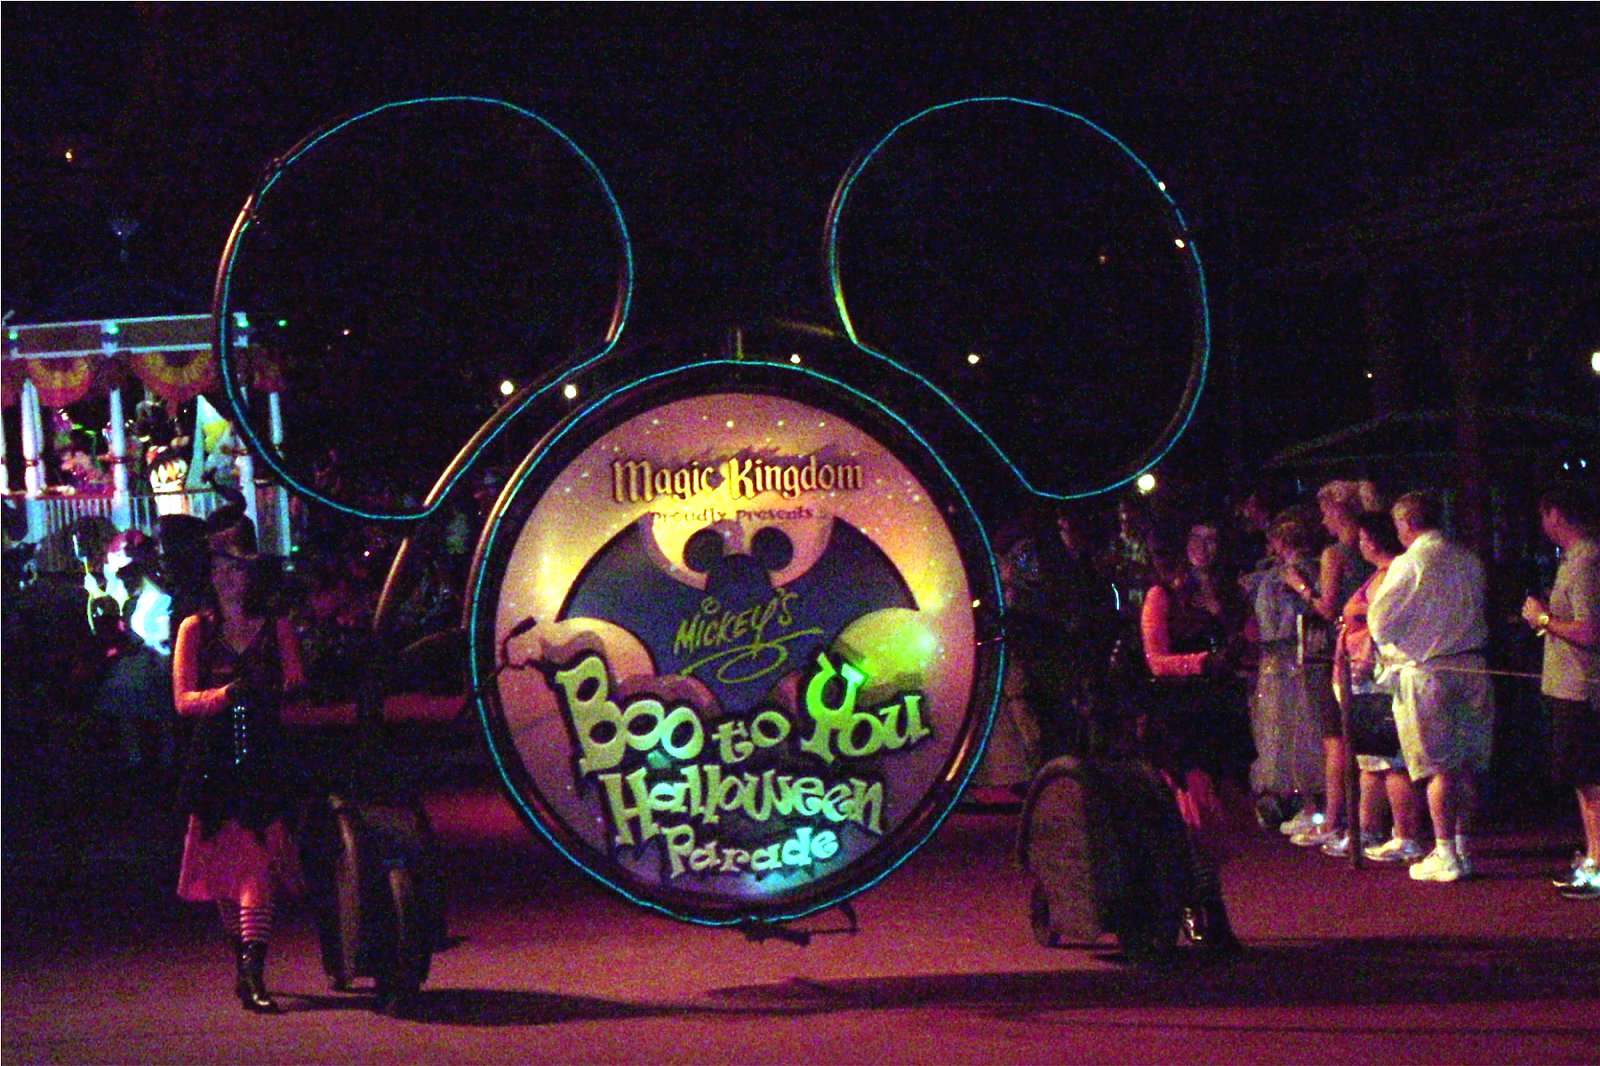 Disney at Heart Boo to You Parade at MNSSHP